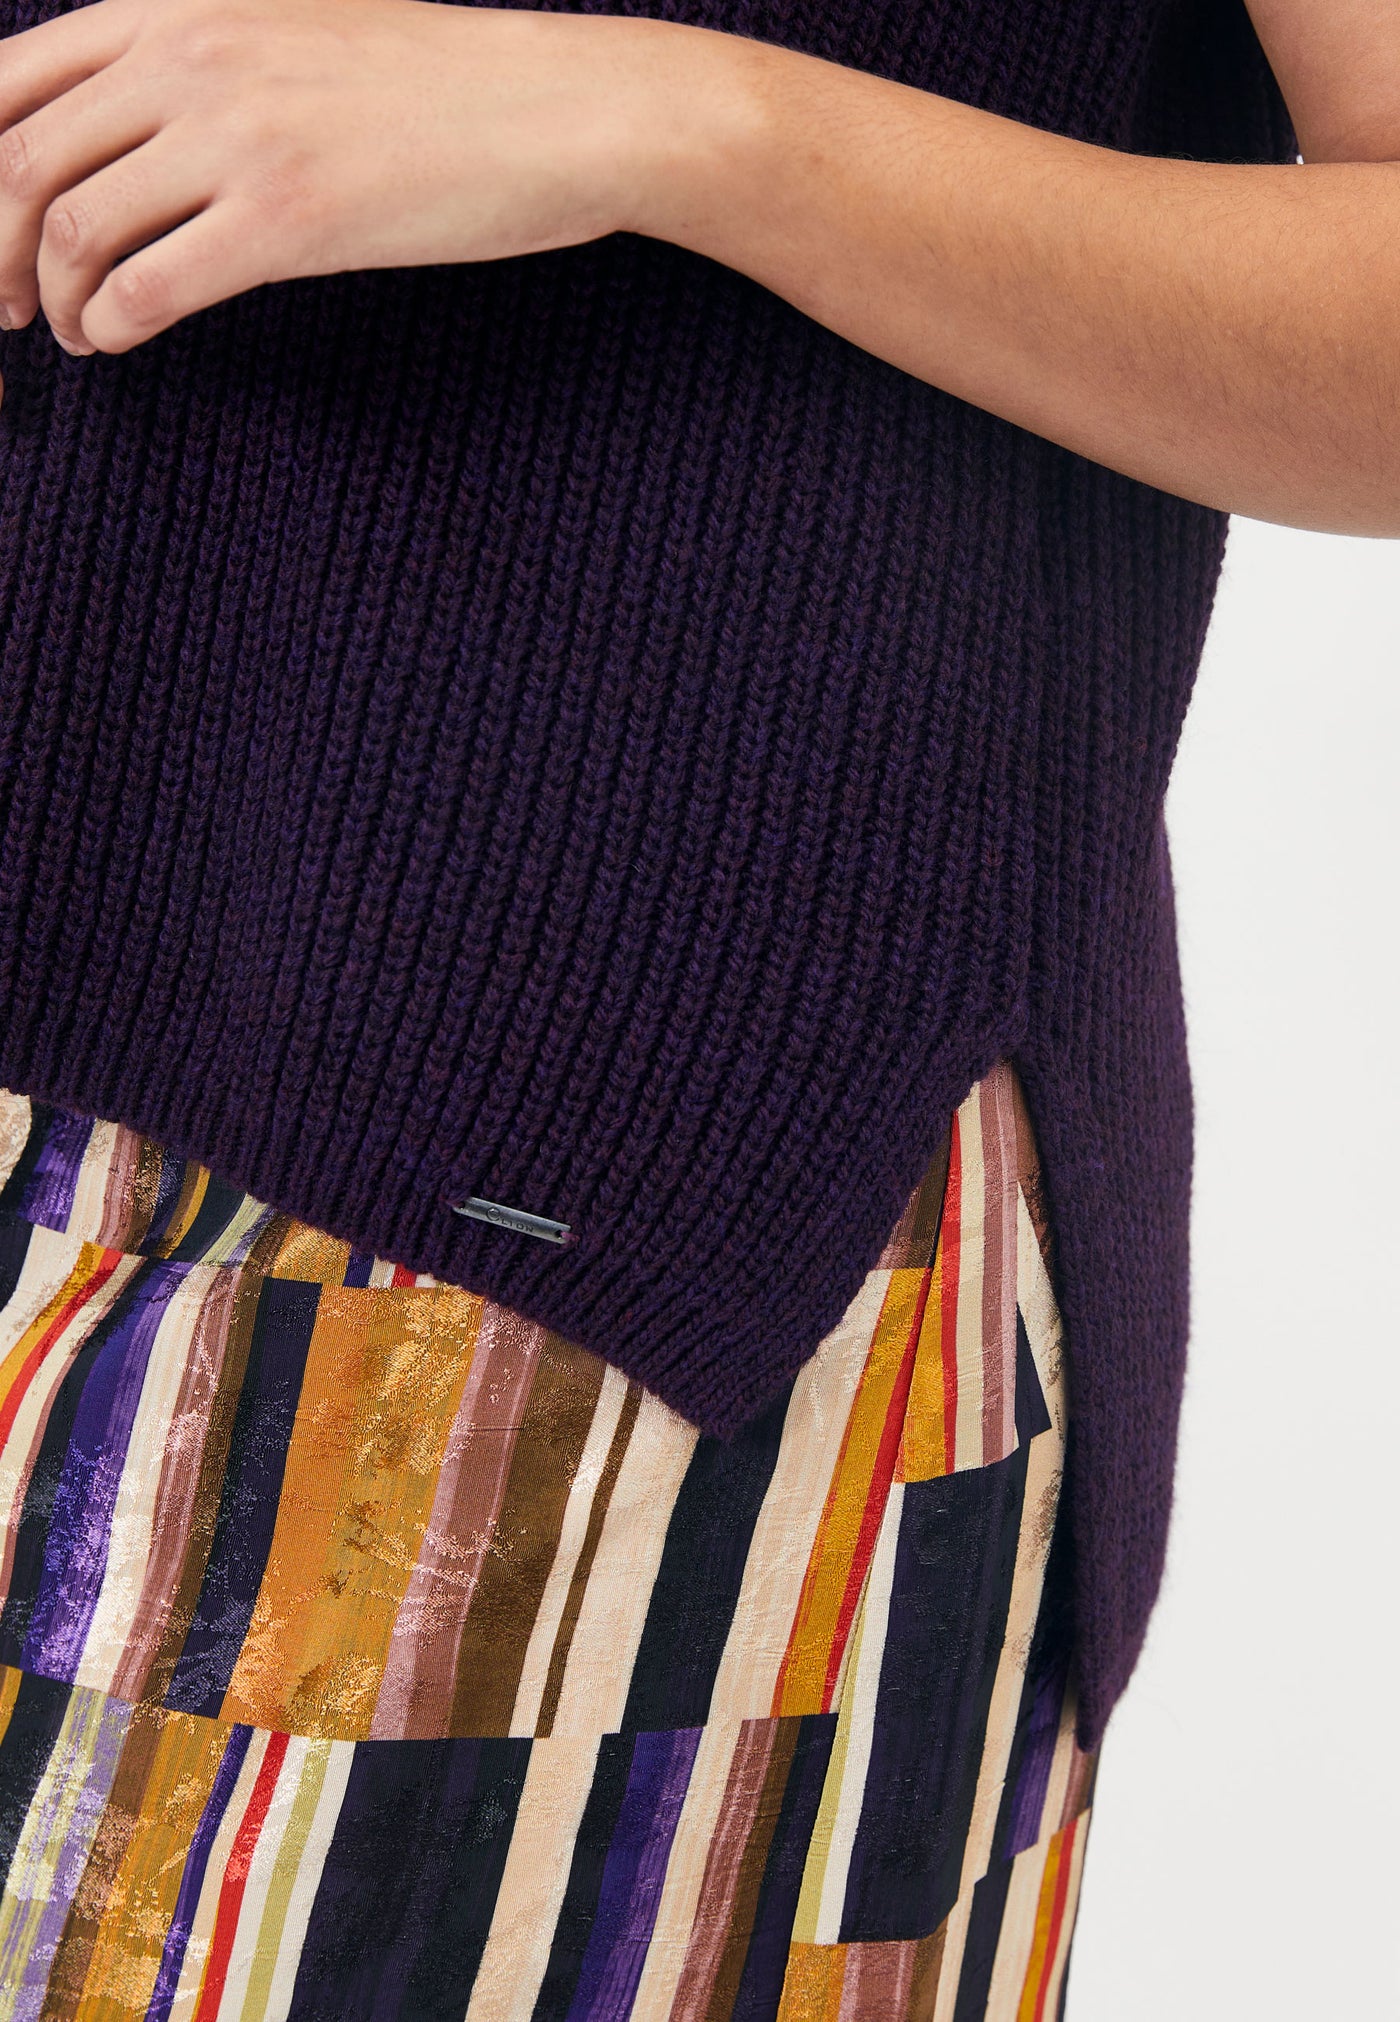 Elton ETHibba Knit Pullover 028 Purple